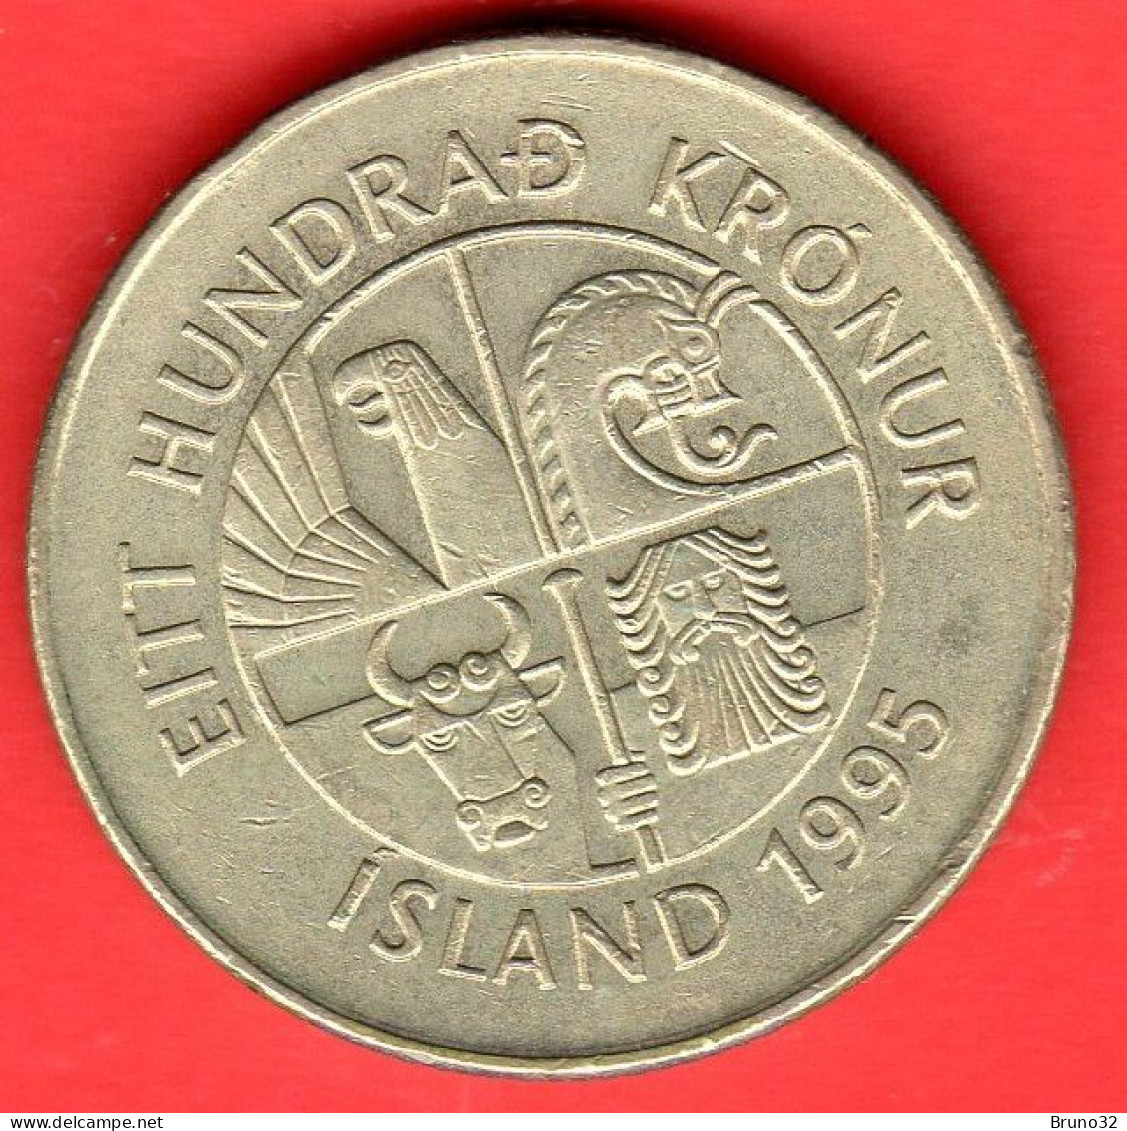 ISLANDA - ISLAND - ICELAND - 1995 - 100 Kronur - SPL/XF - Come Da Foto - Iceland